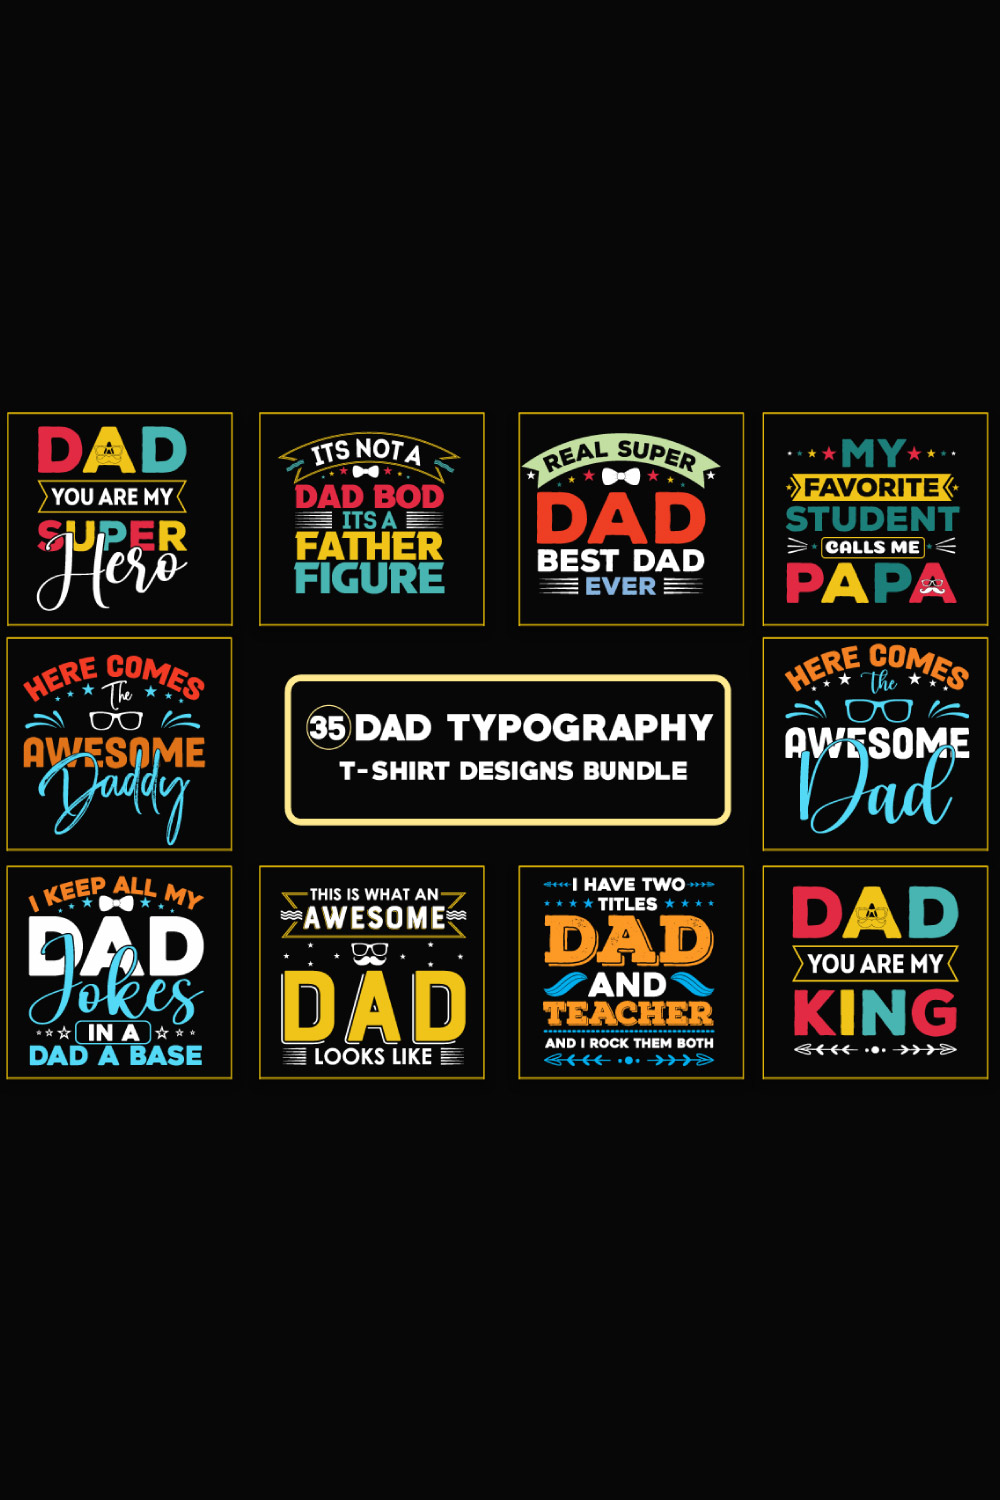 Dad Typography T-Shirt Designs Bundle pinterest preview image.